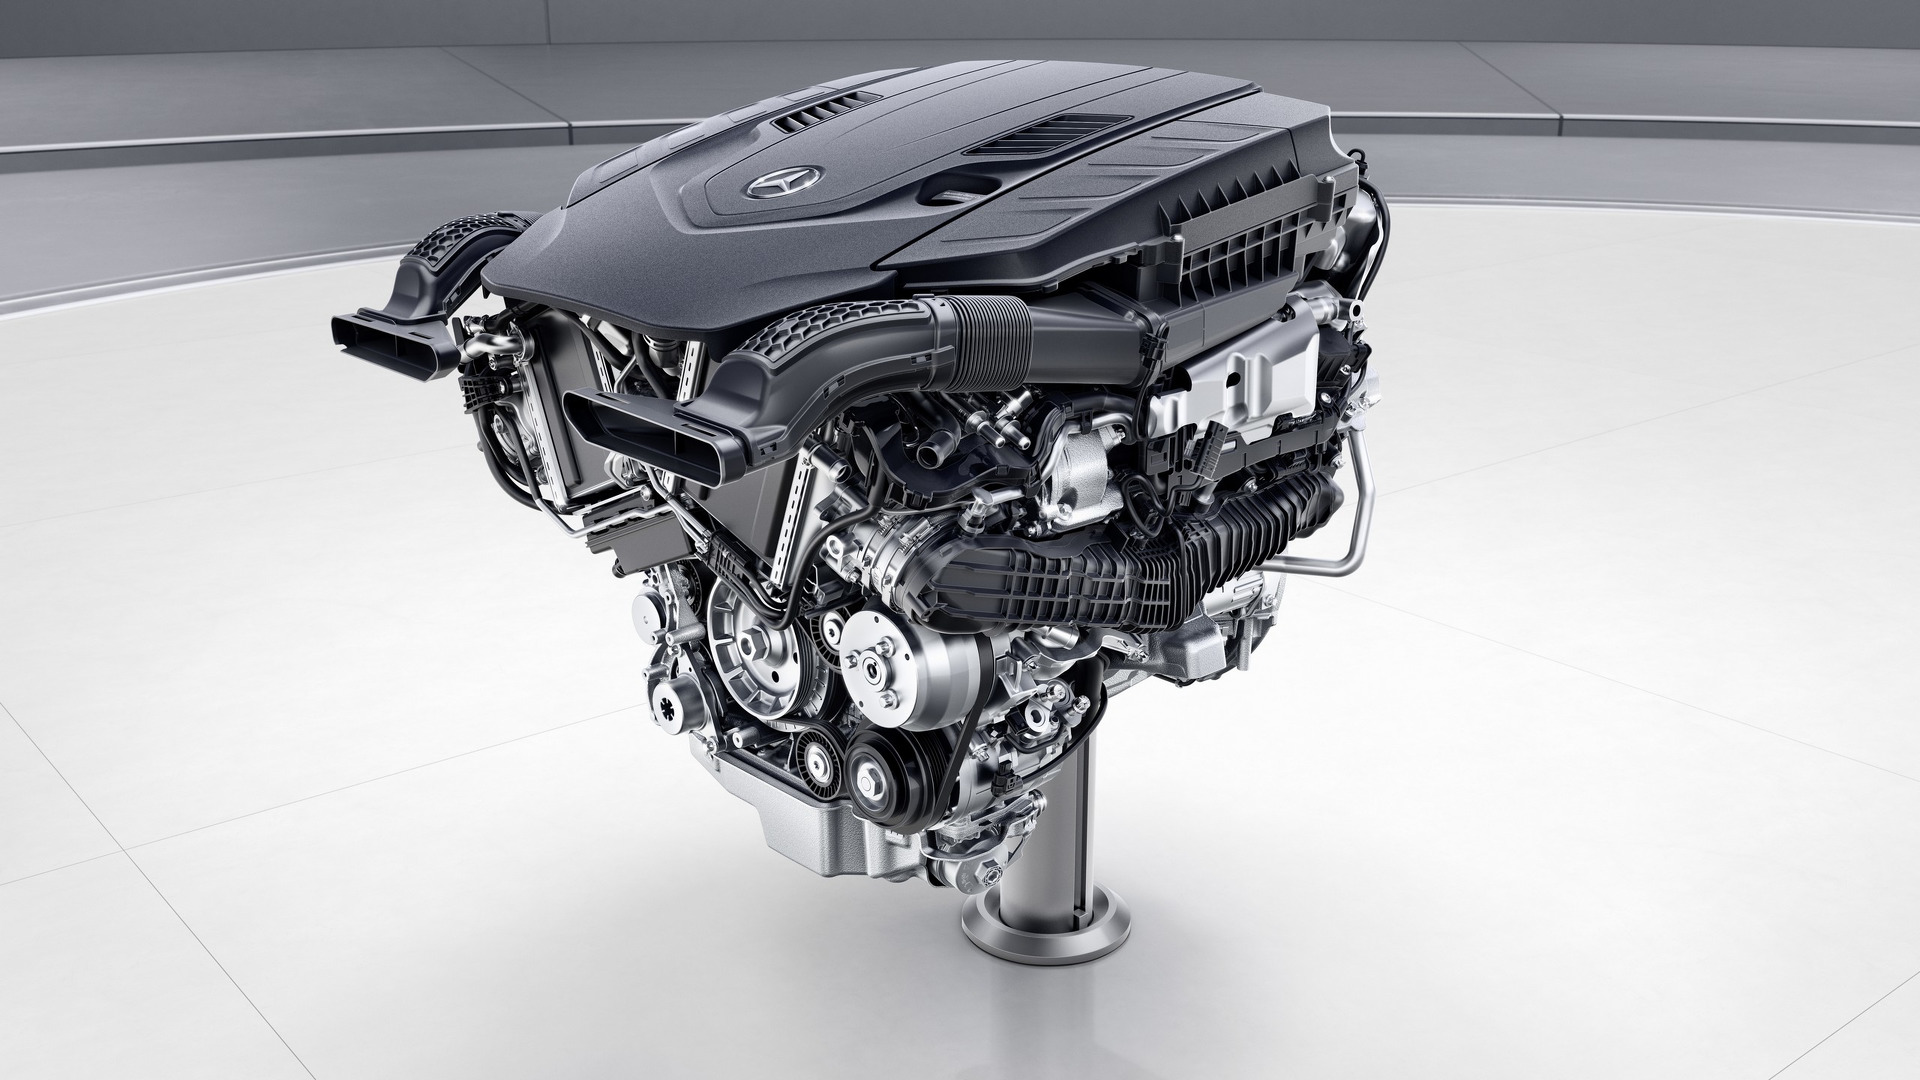 M176汽油引擎，4.0L雙渦輪V8引擎擁有476hp/71.4kgm最大輸出。